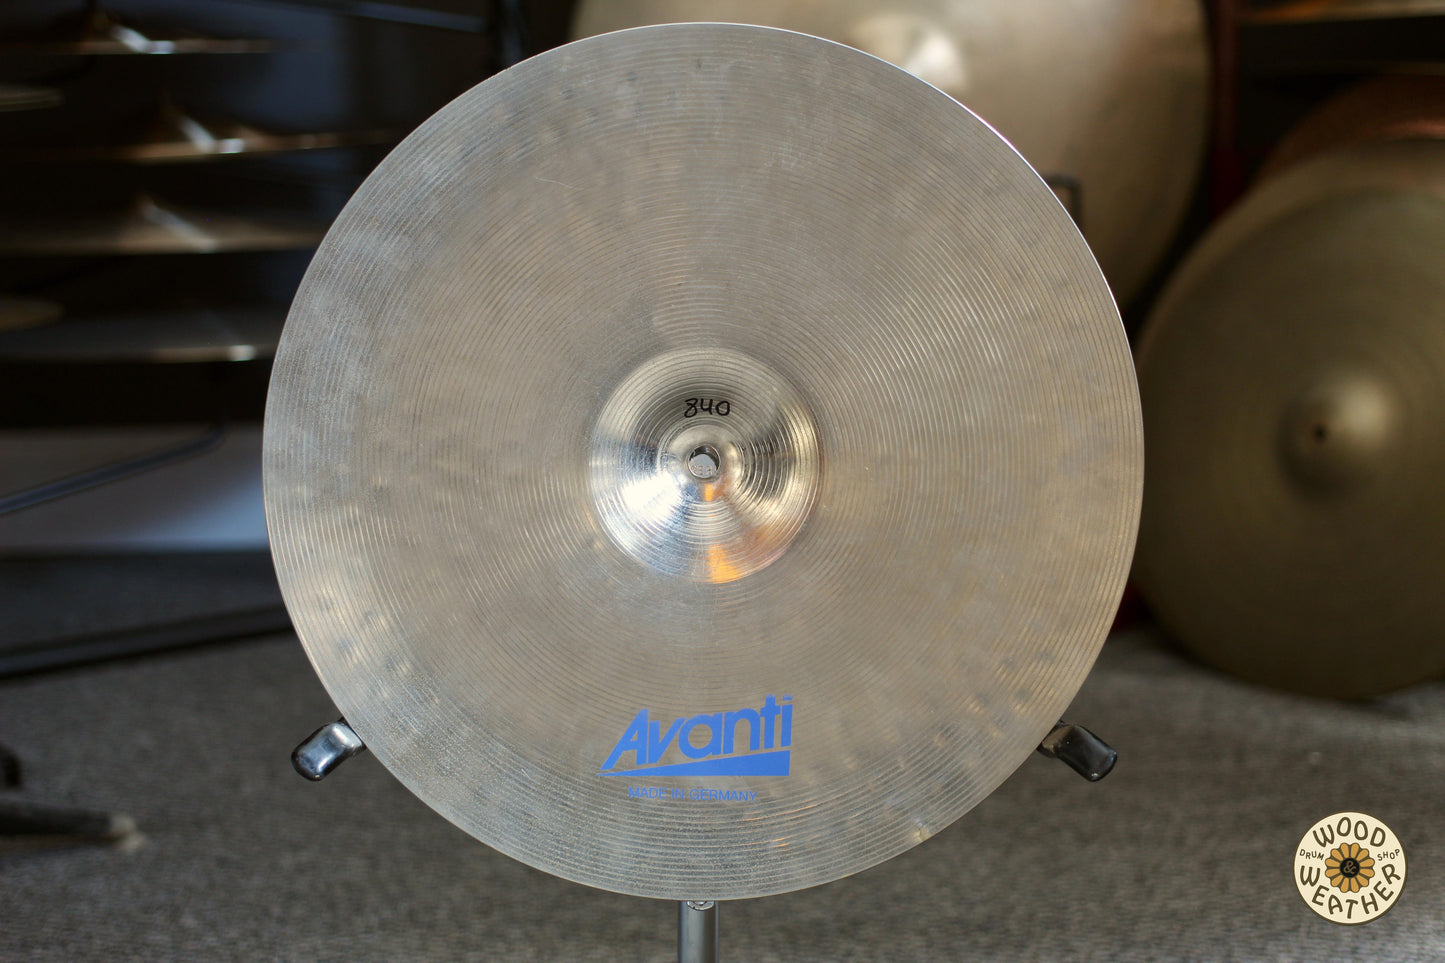 1980s Avanti 14" Crash Cymbal 840g